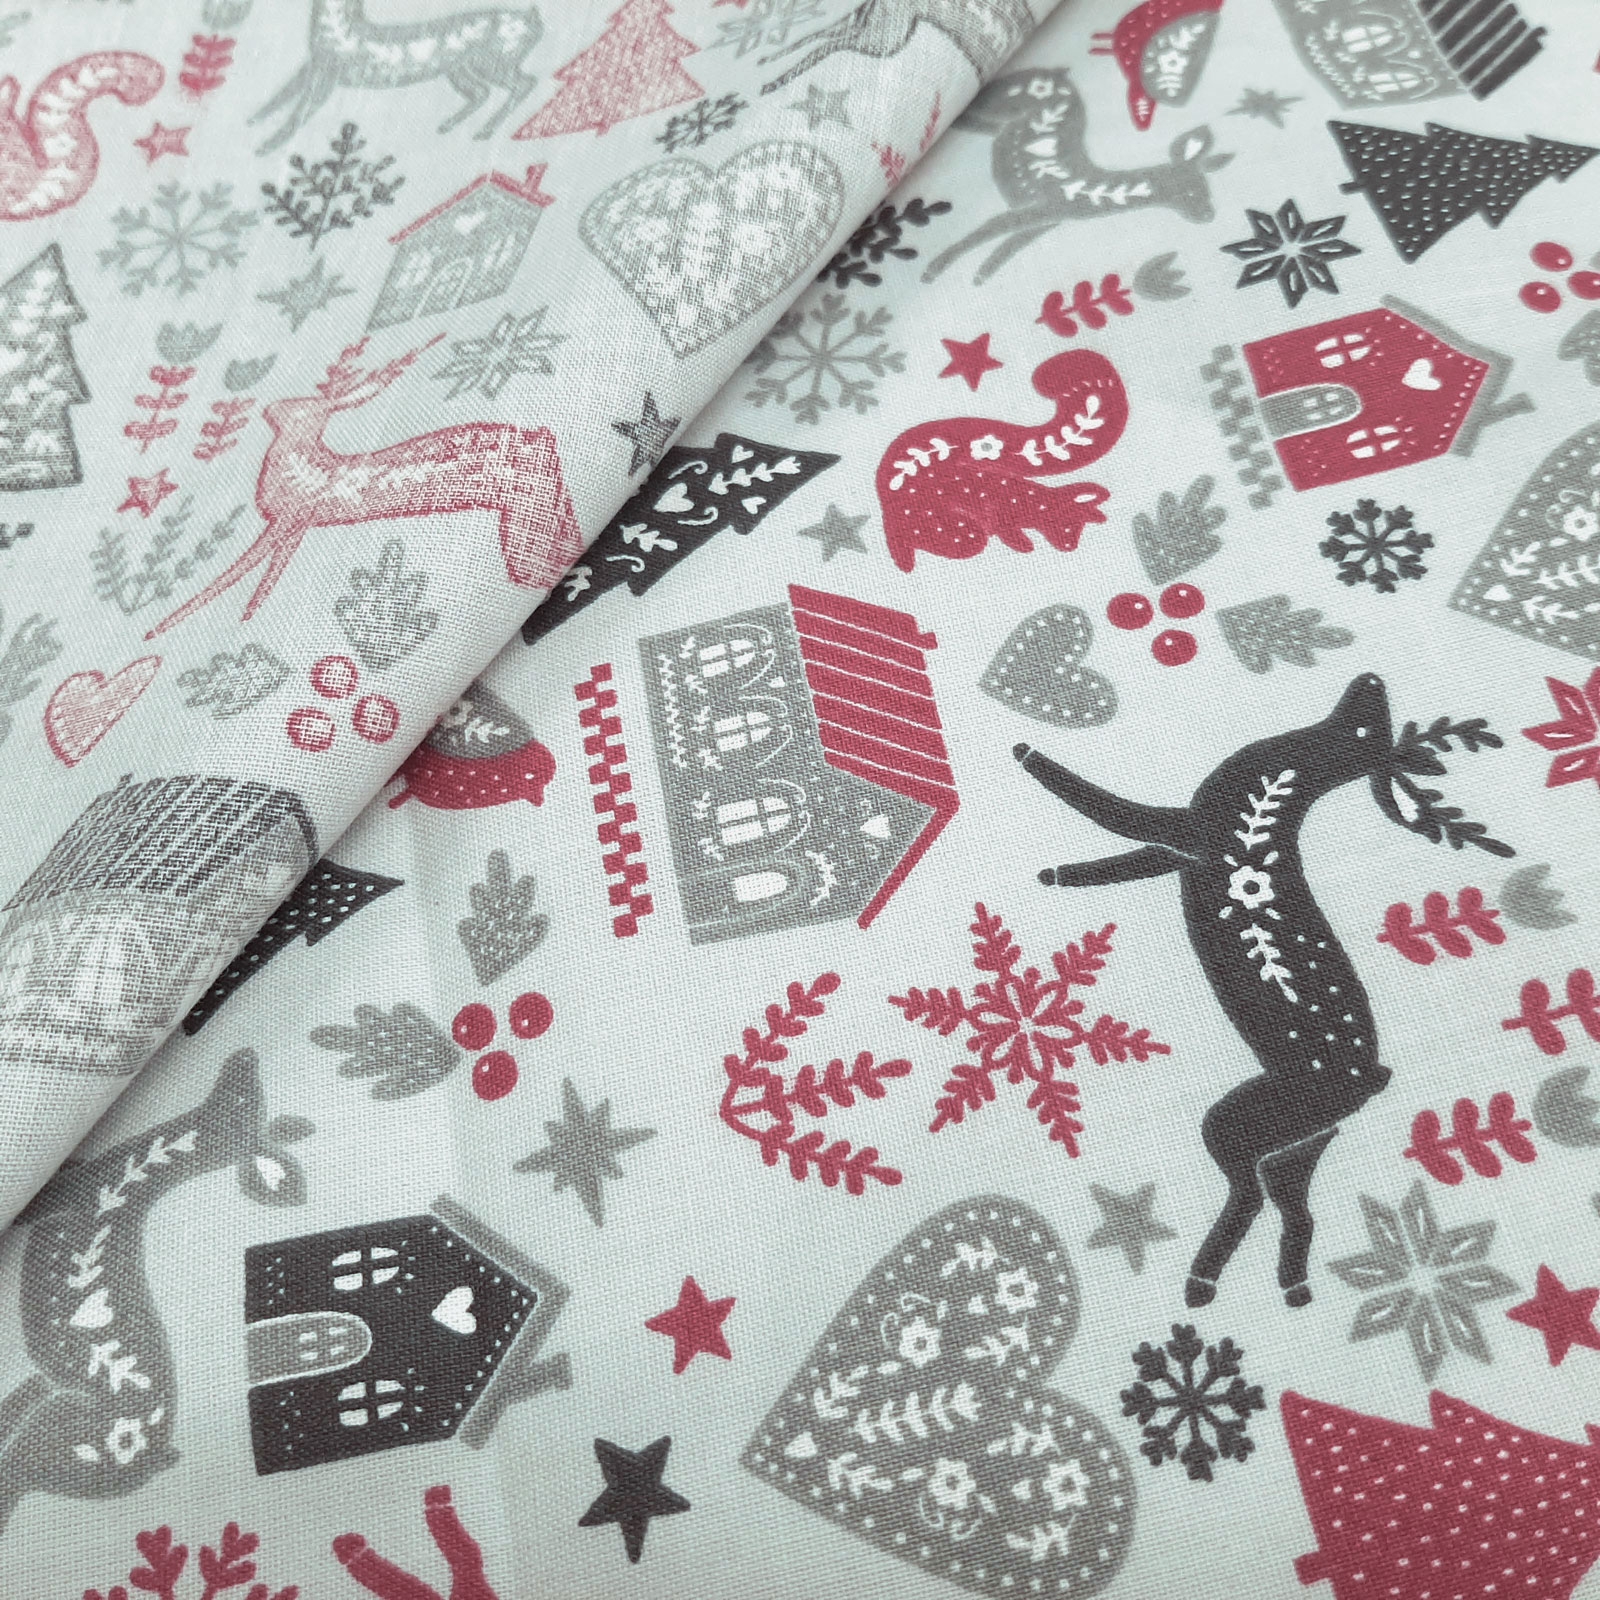 Christmas fabric "Christmas Reindeer" - extra width 160cm-Bordeaux